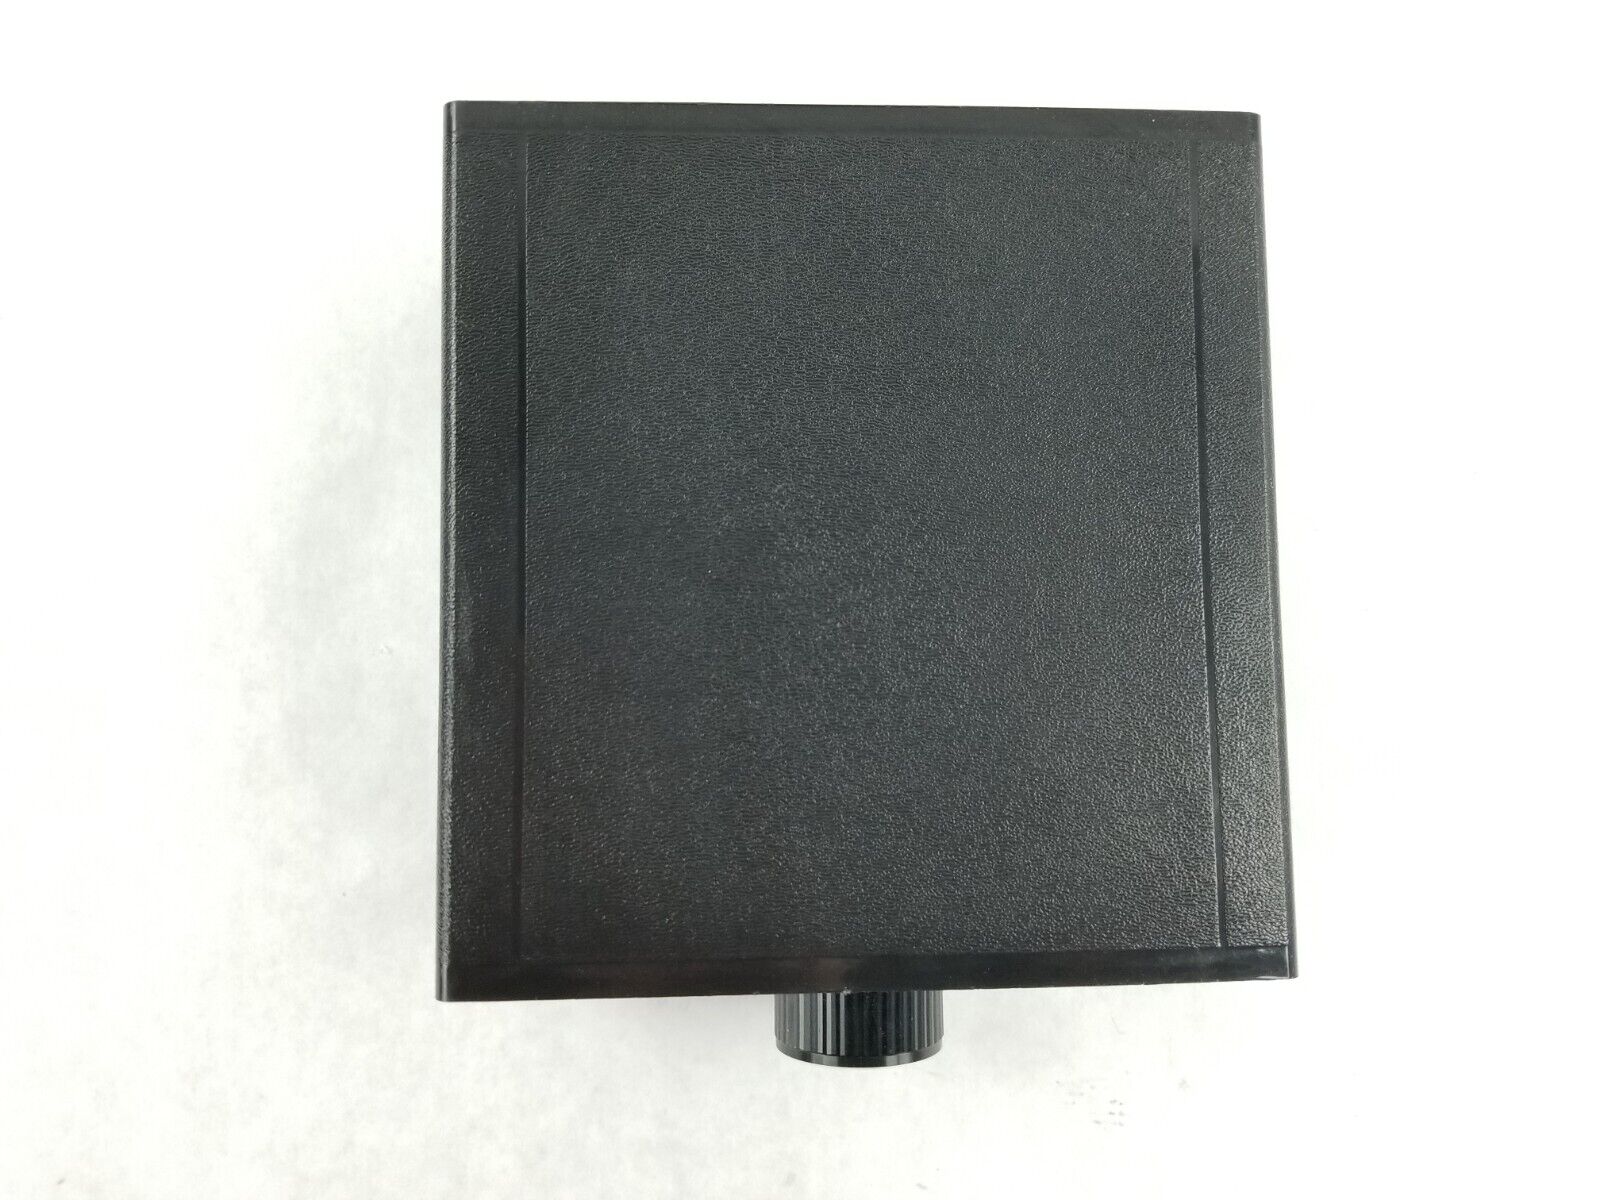 Black Box SWL060A ABC Switch